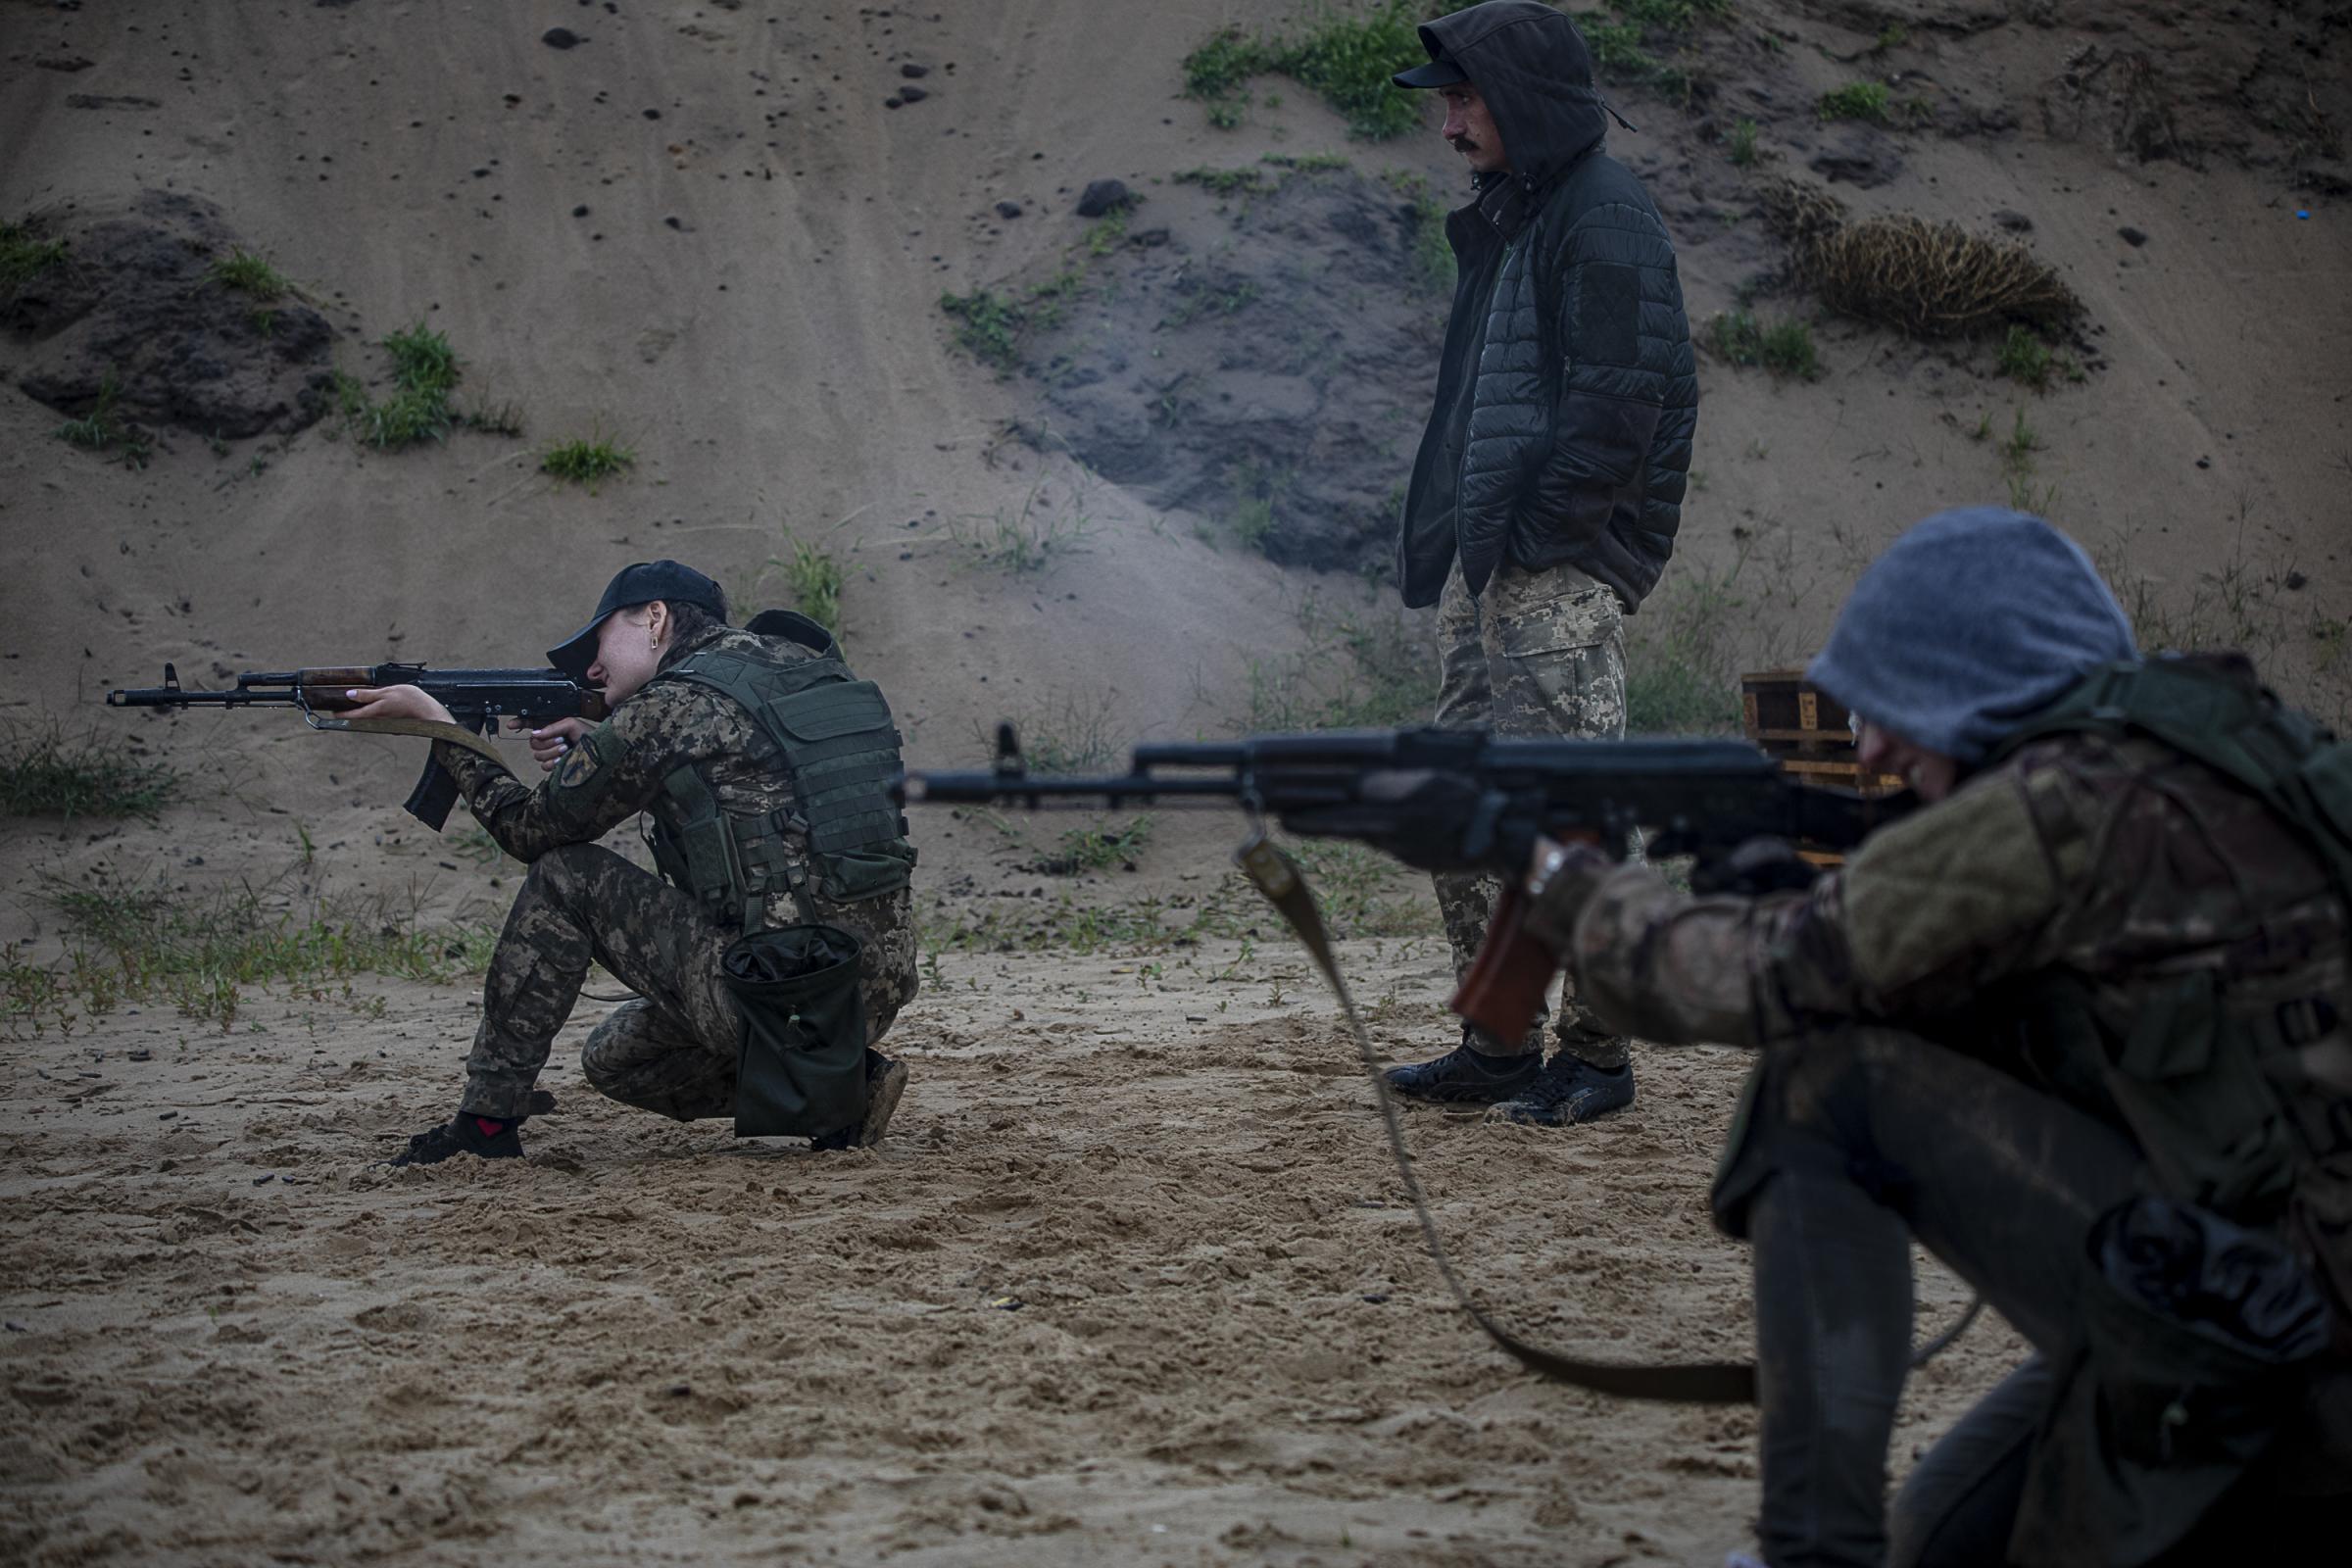 Defenders in training: empowering Ukrainian civilians amidst ongoing war